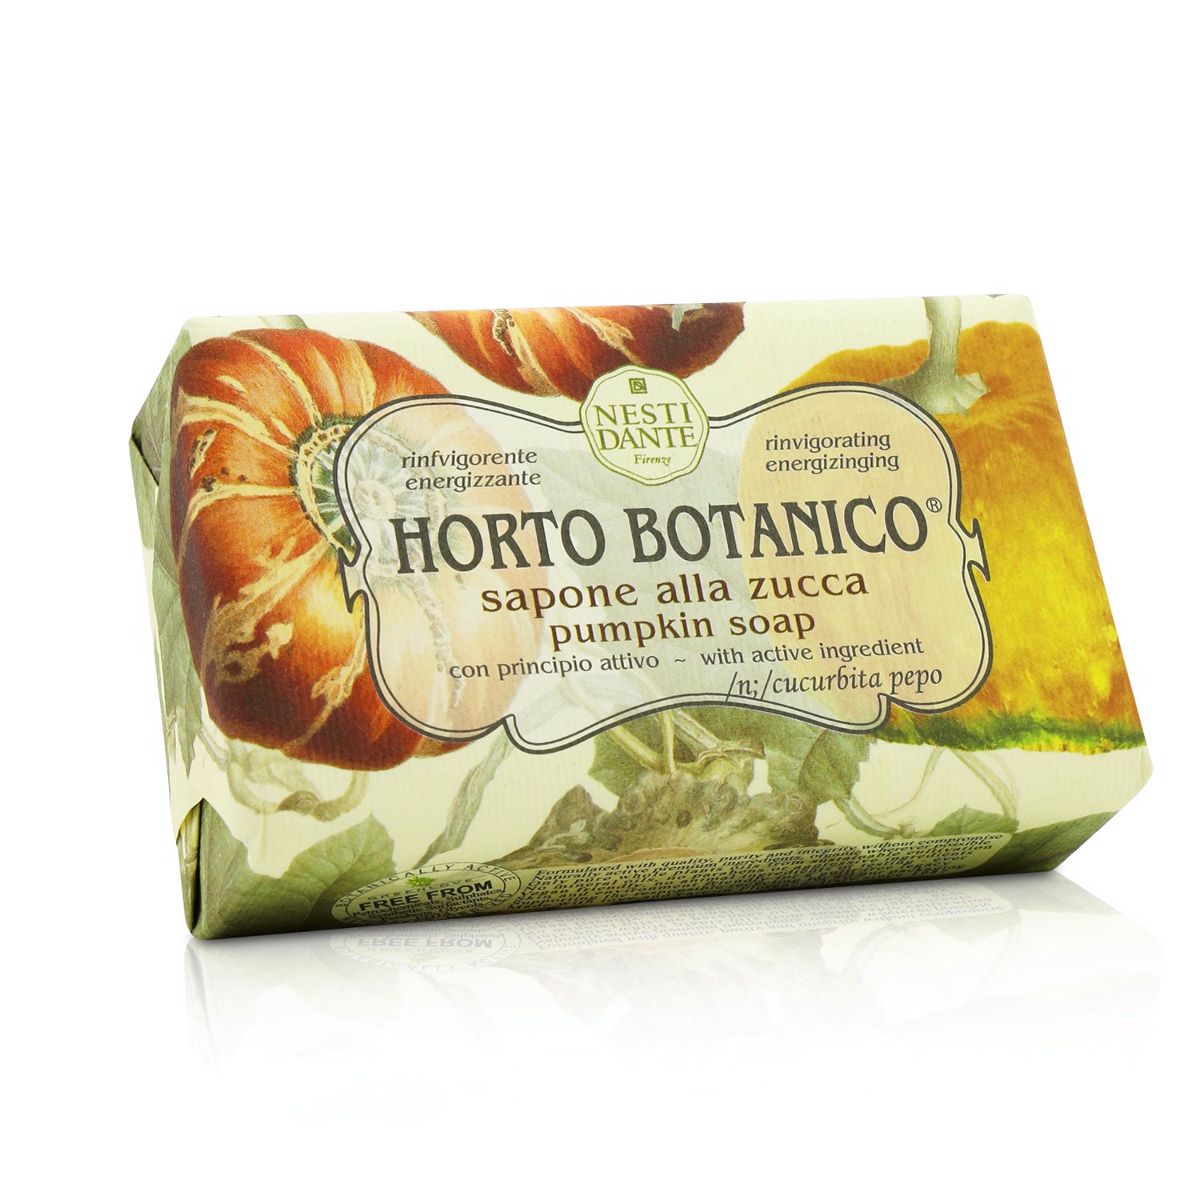 Horto Botanico Pumpkin Soap Nesti Dante Image